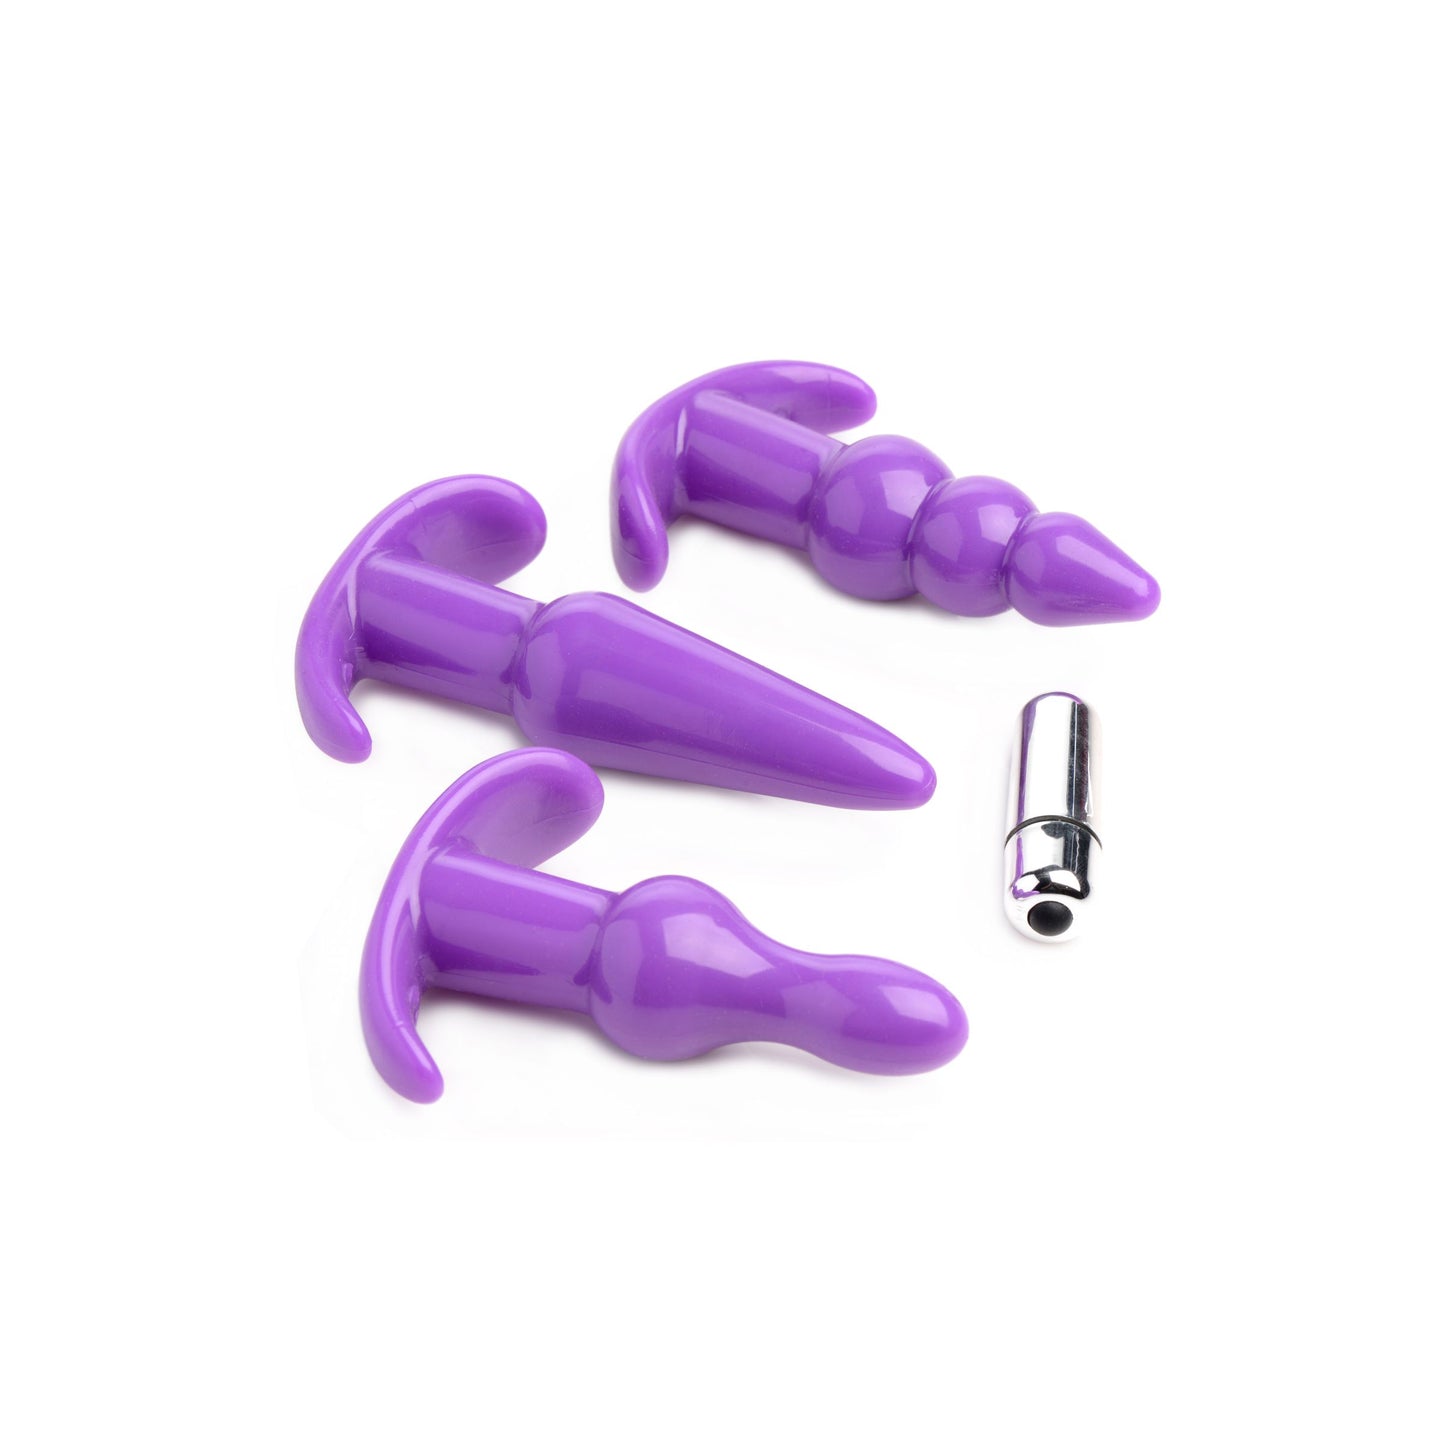 4 Piece Vibrating Anal Plug Set- Purple - UABDSM